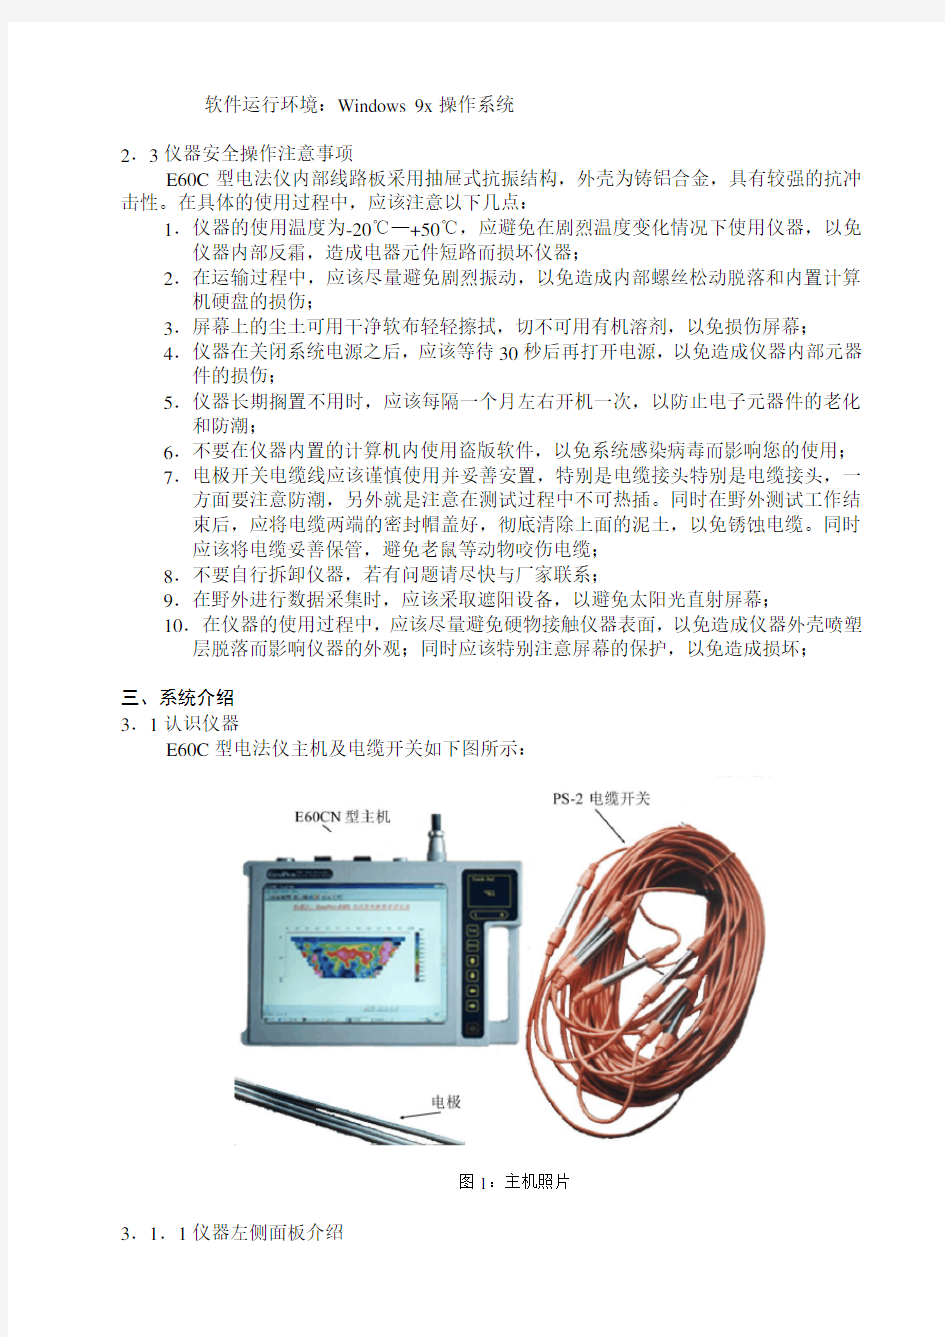 E60C高密度电法仪操作说明书